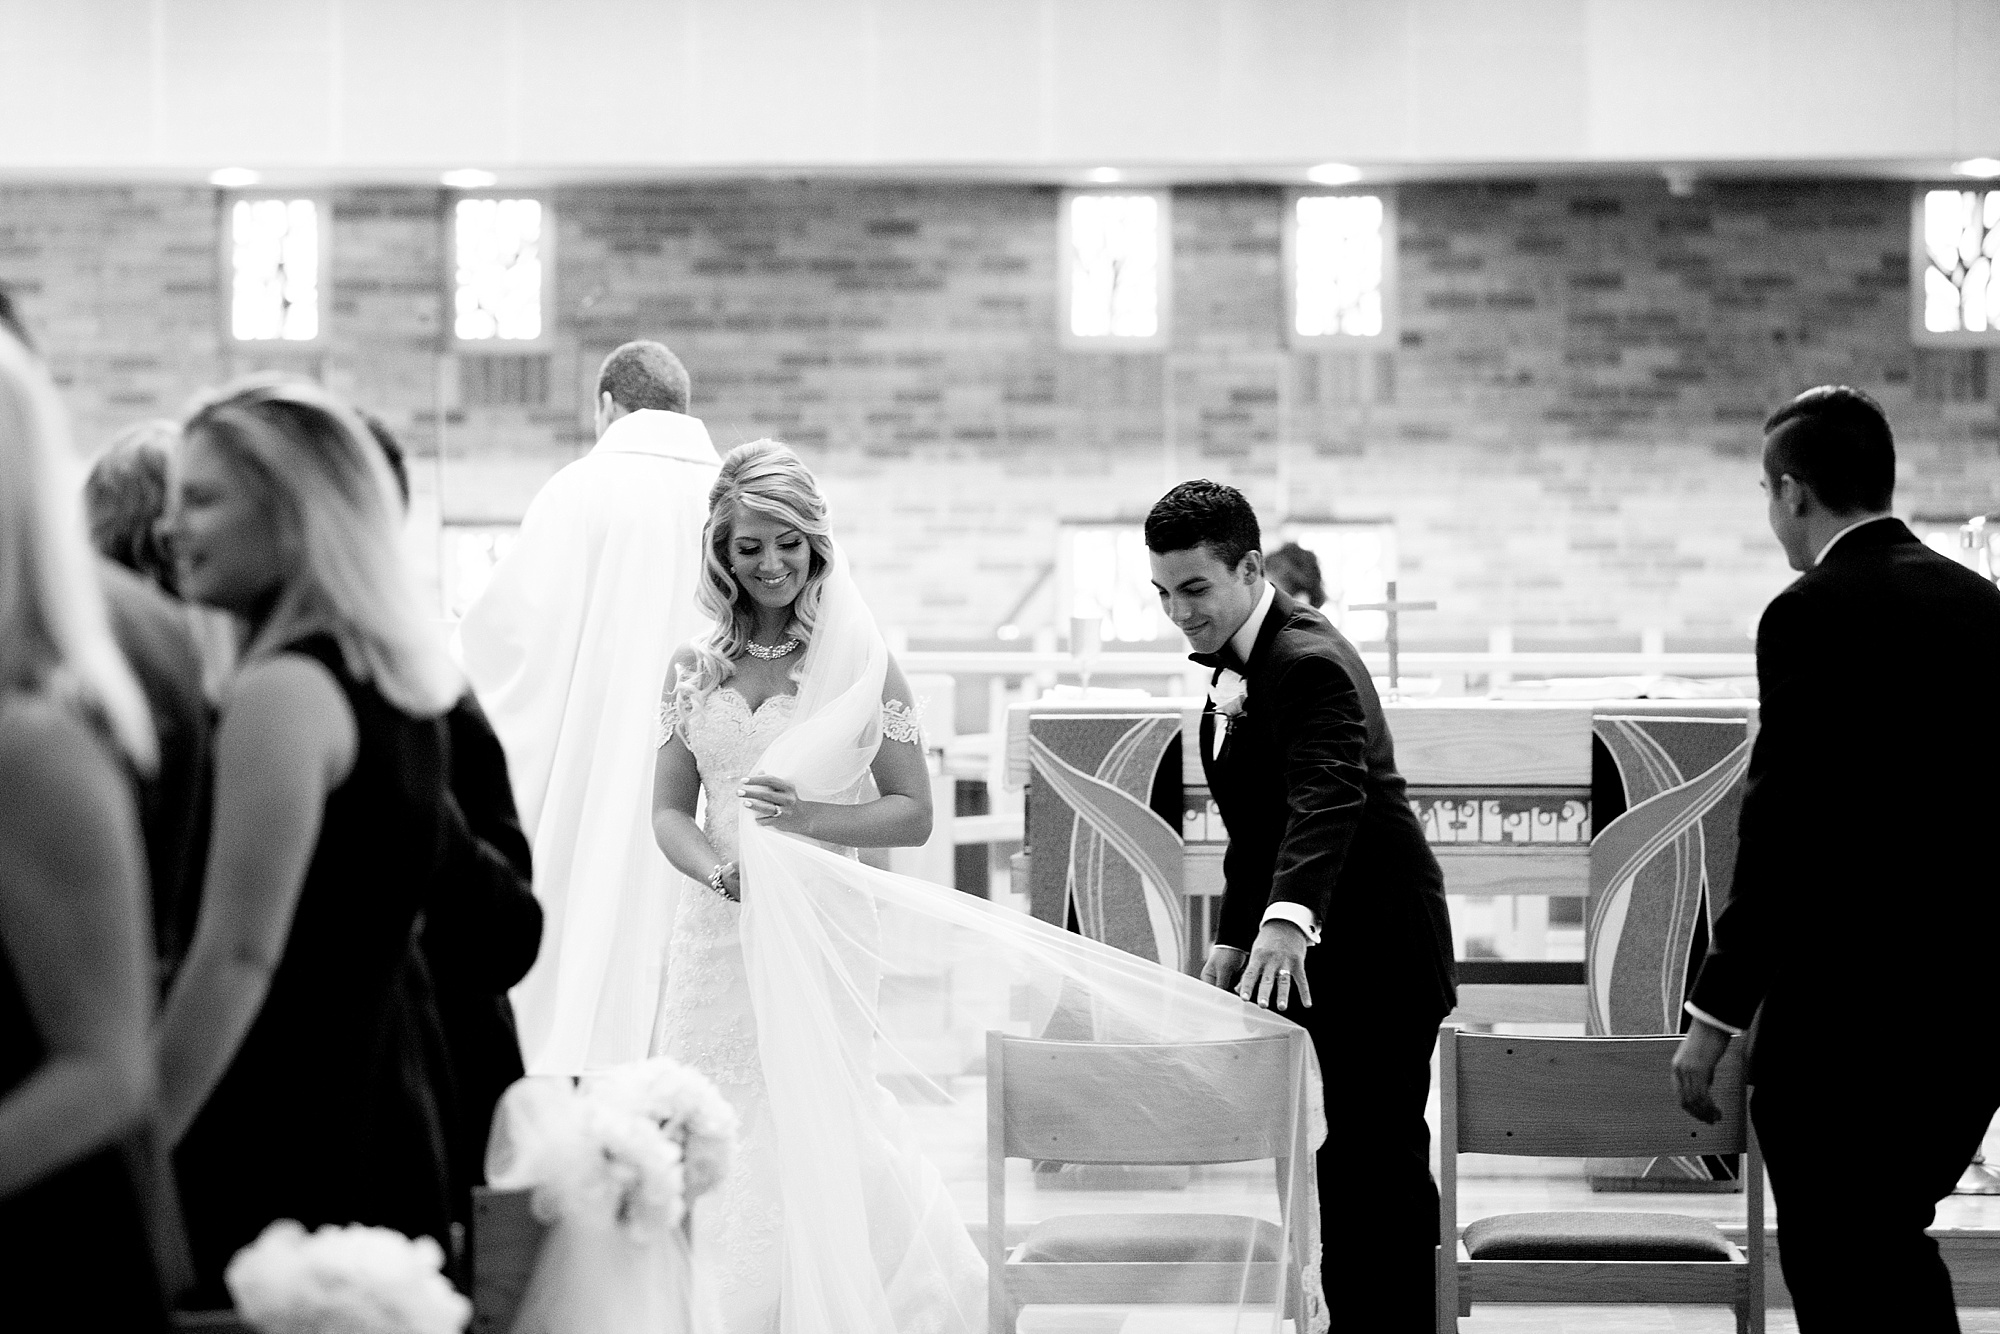 An elegant black tie end-of-summer wedding in Metro Detroit, Michigan by Breanne Rochelle Photography.